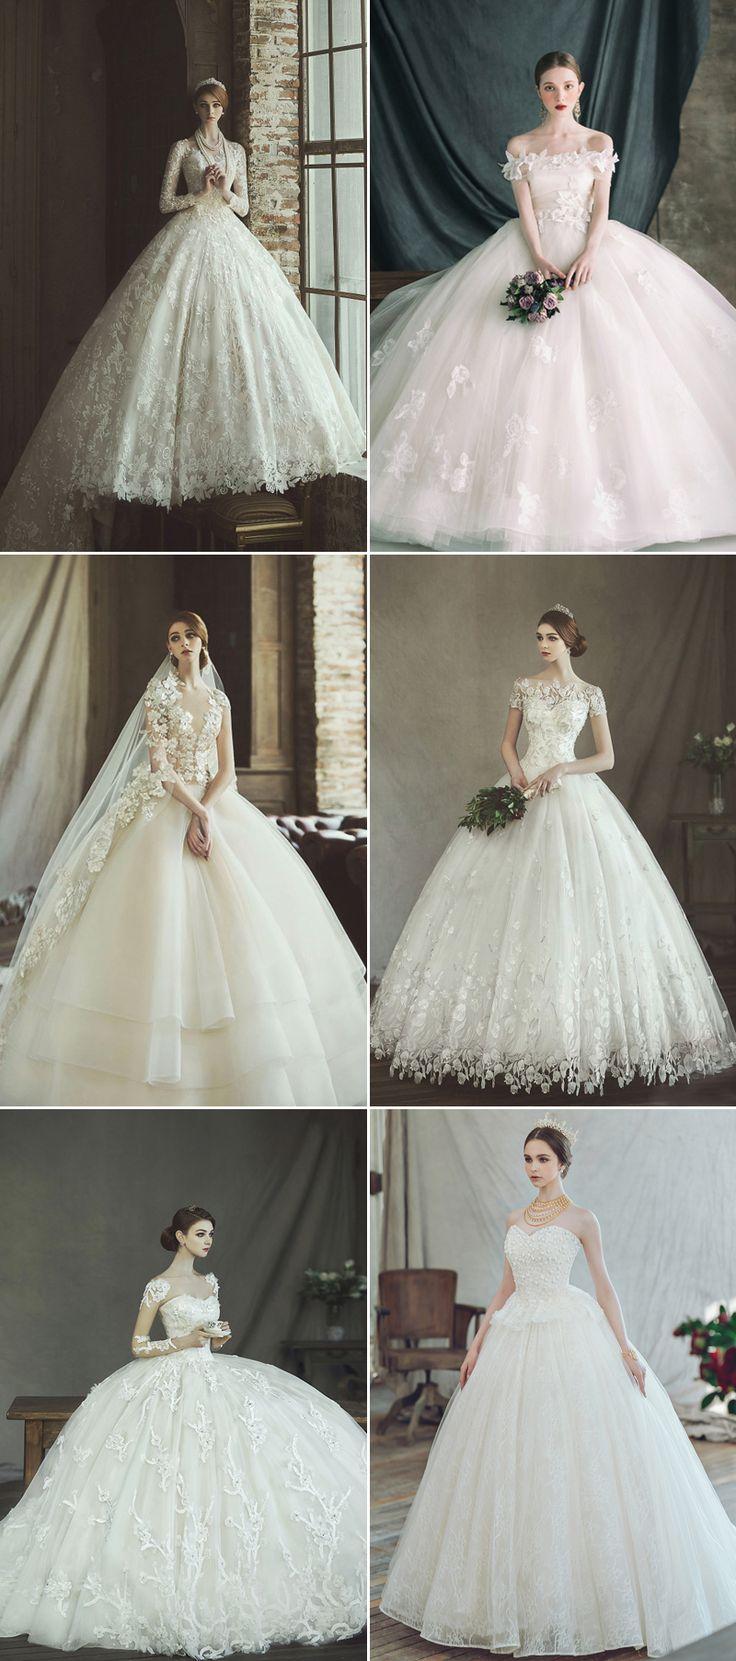 زفاف - Make A Romantic Regal Statement! 28 Princess-Worthy Wedding Gowns You'll Love